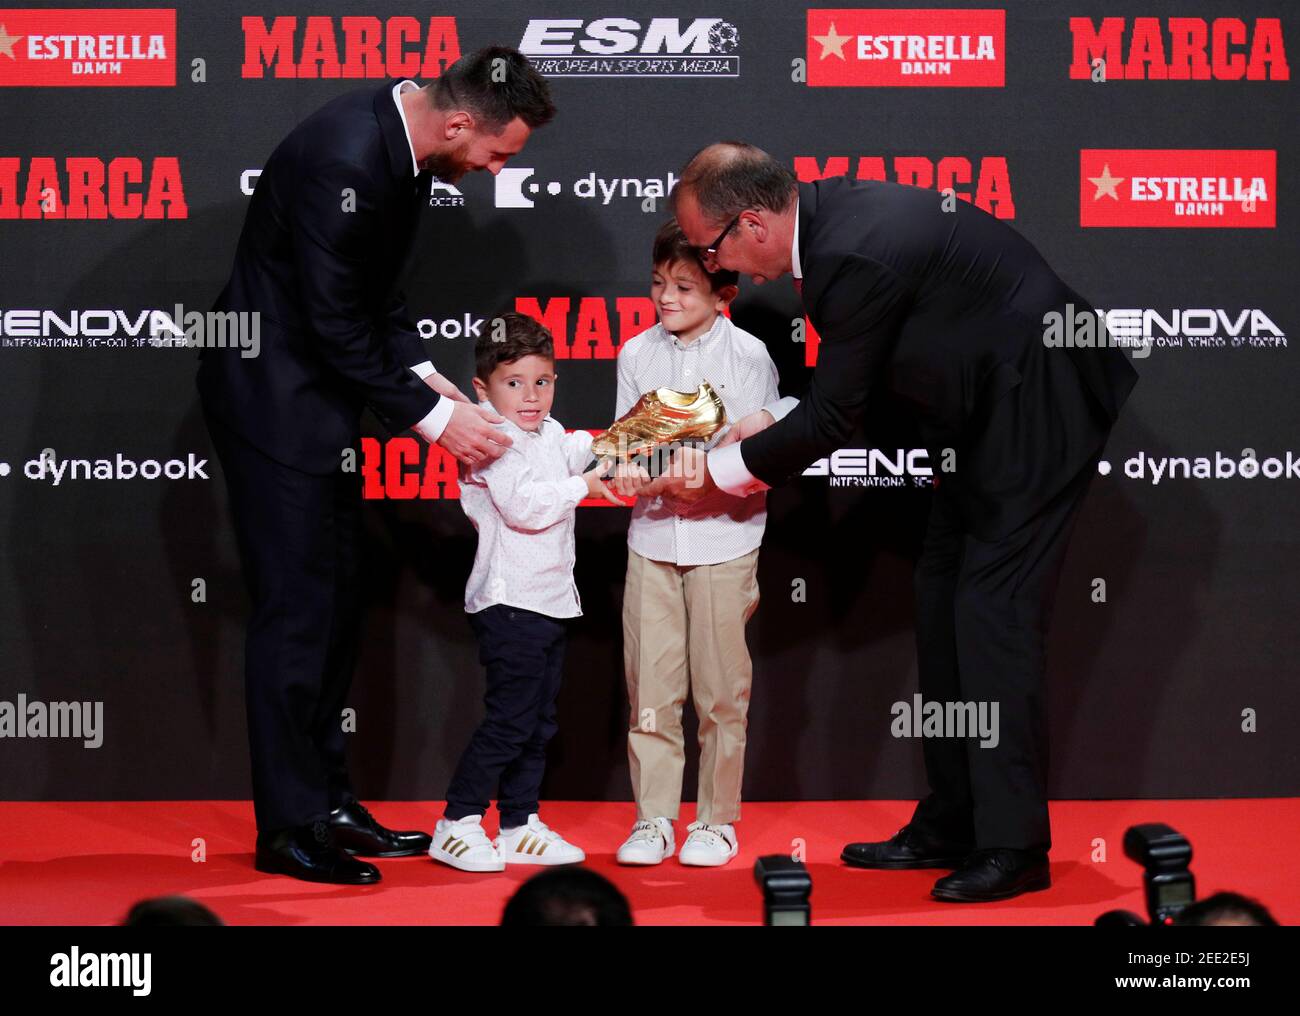 Soccer Football - FC Barcelona's Lionel Messi receives his sixth Golden  Shoe - Antiga Fabrica Estrella Damm, Barcelona, Spain - October 16, 2019  Juan Ignacio Gallardo, director of Marca Newspaper awards the